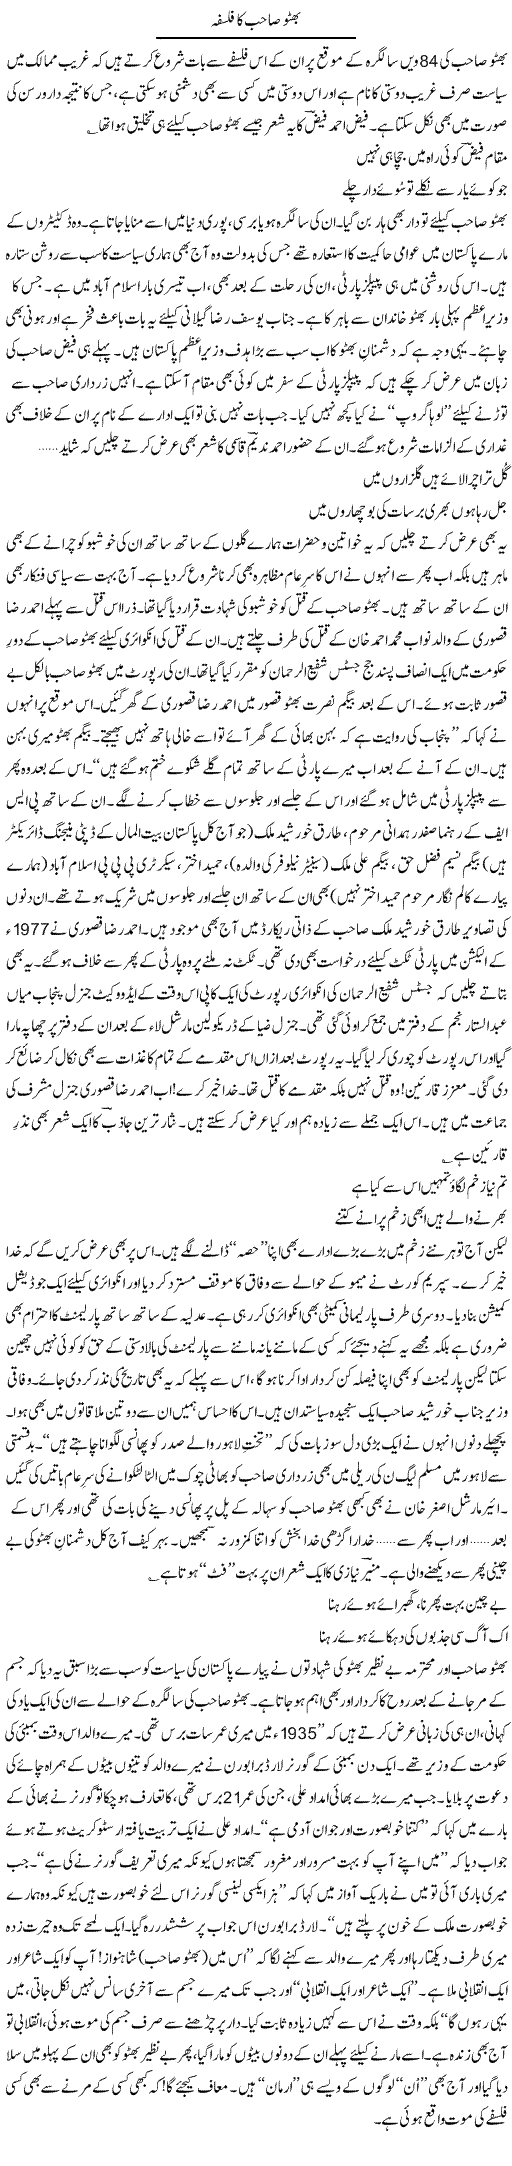 Bhutto Sahab Express Column Ijaz Khan 8 January 2012